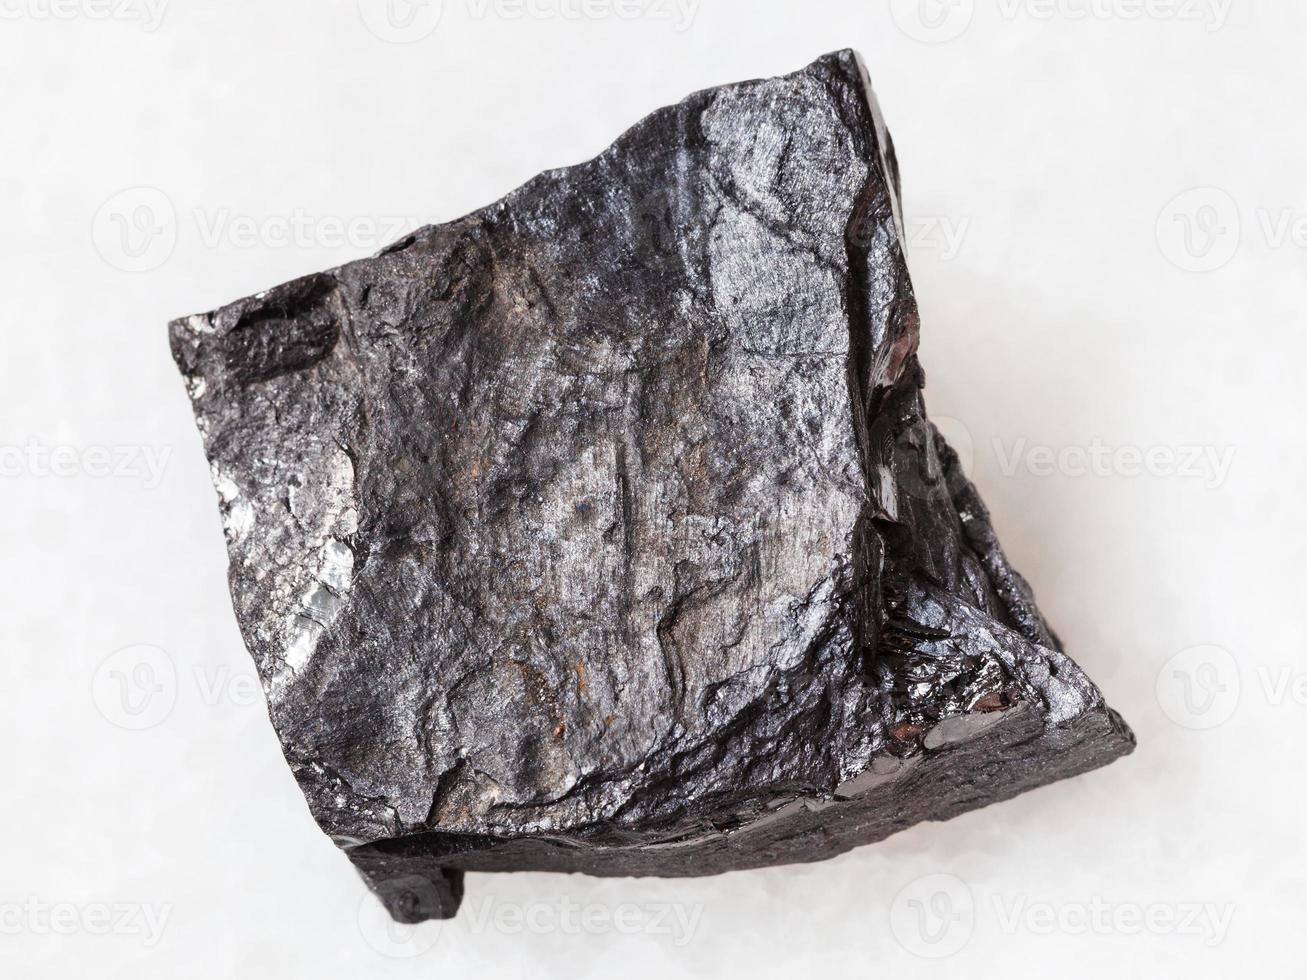 pedra de xisto carbonáceo áspera em branco foto